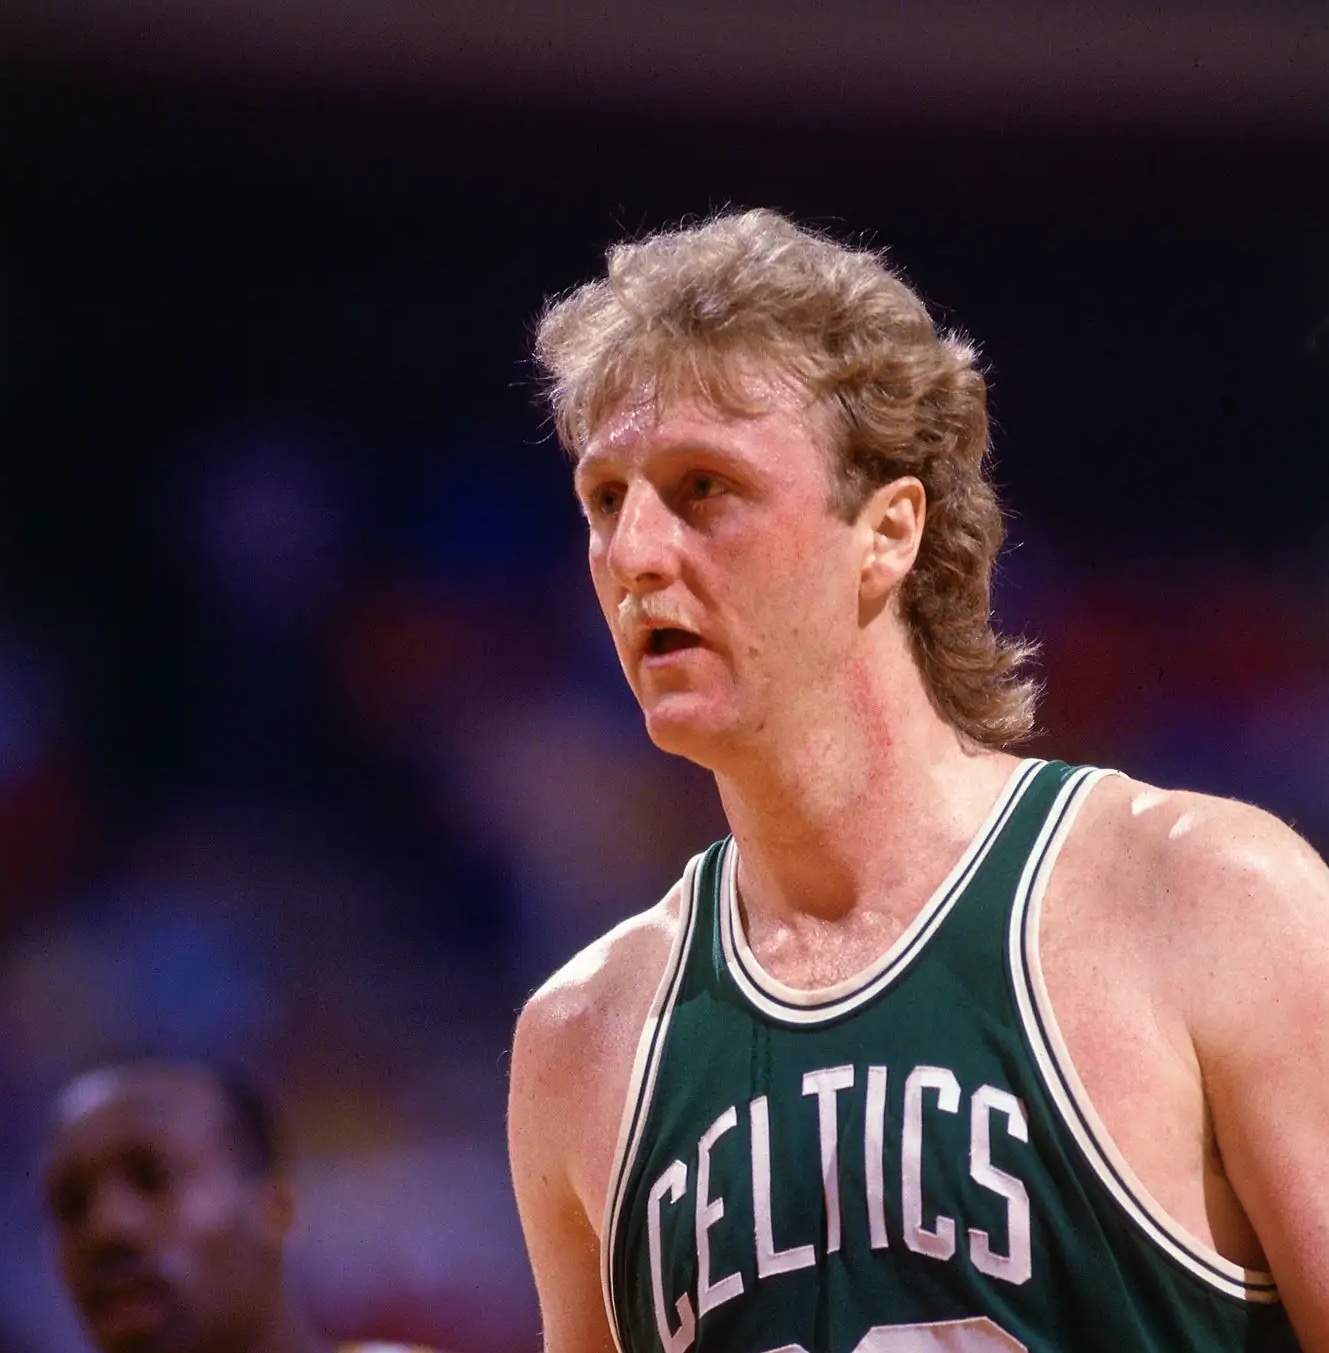 best celebrity mullets of all time - basketball player - Celtics